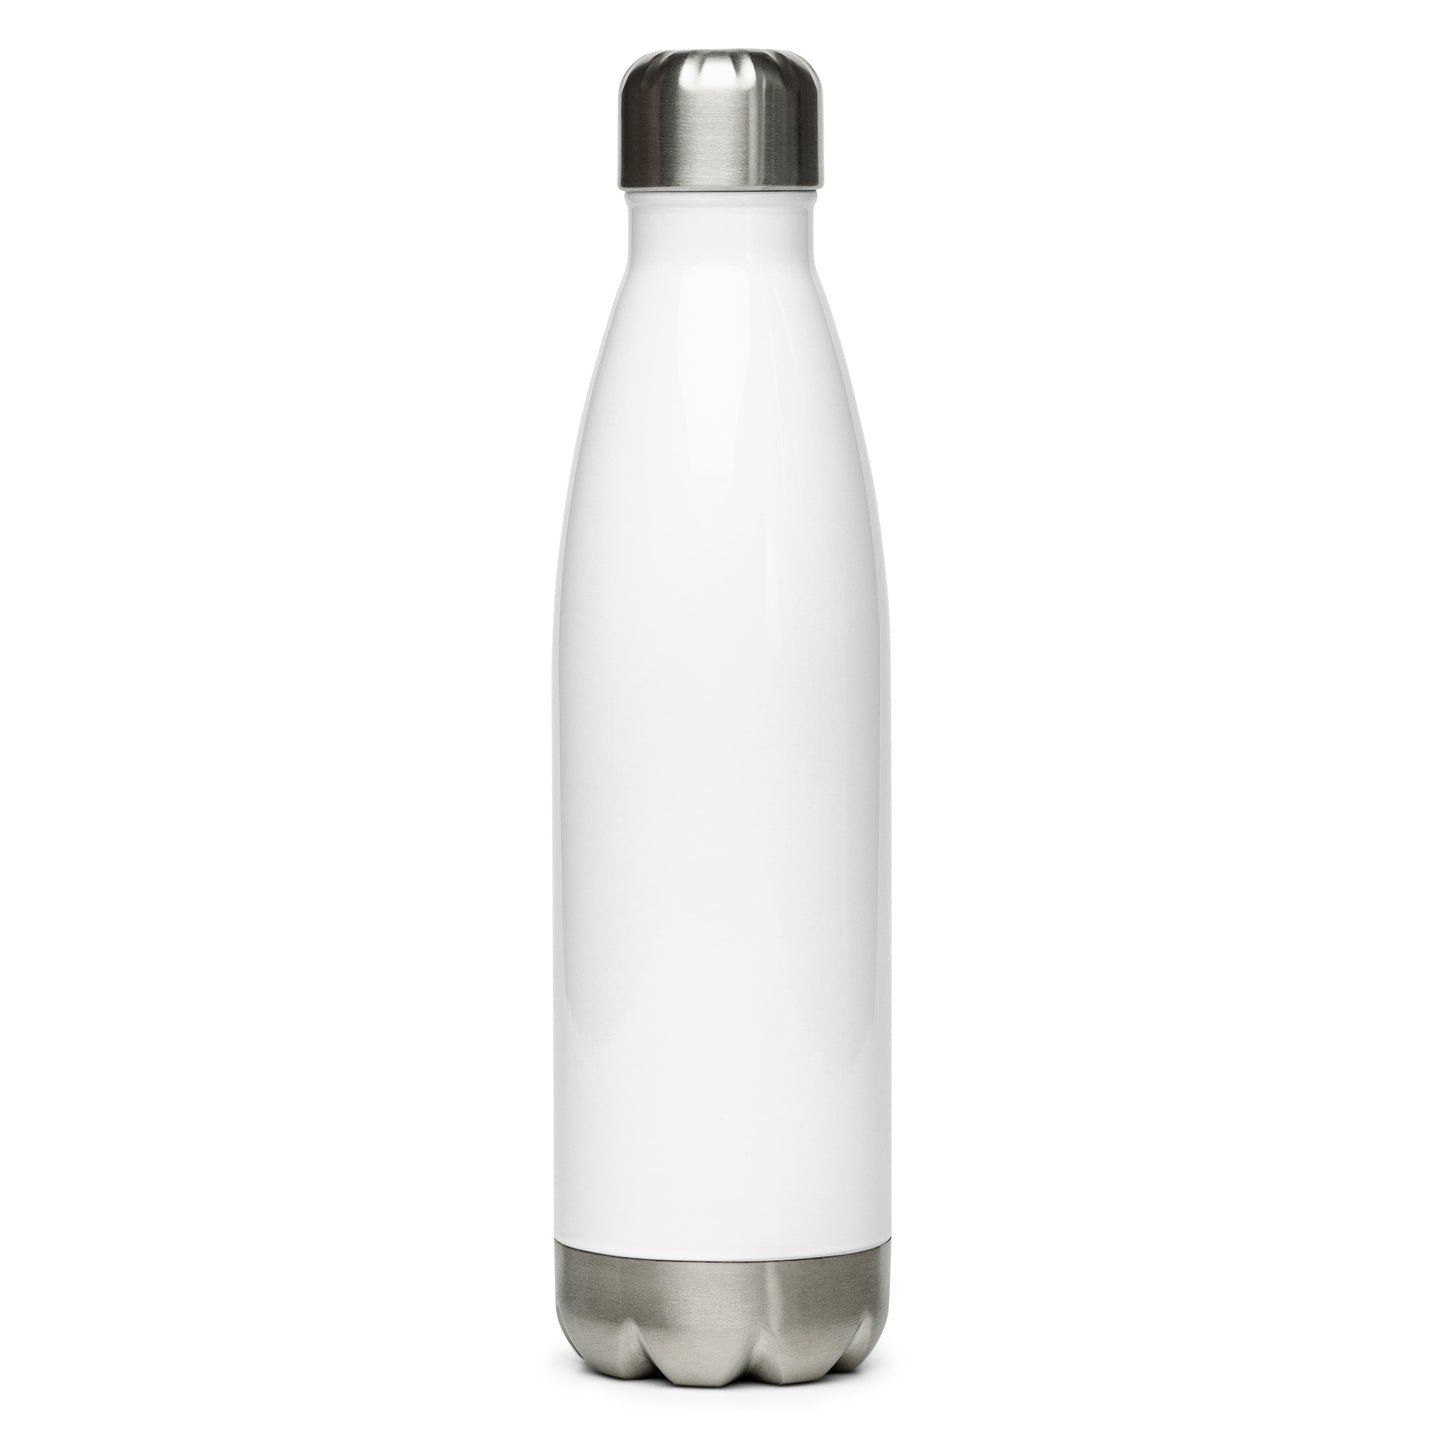 Emmaus Stainless Steel Water Bottle